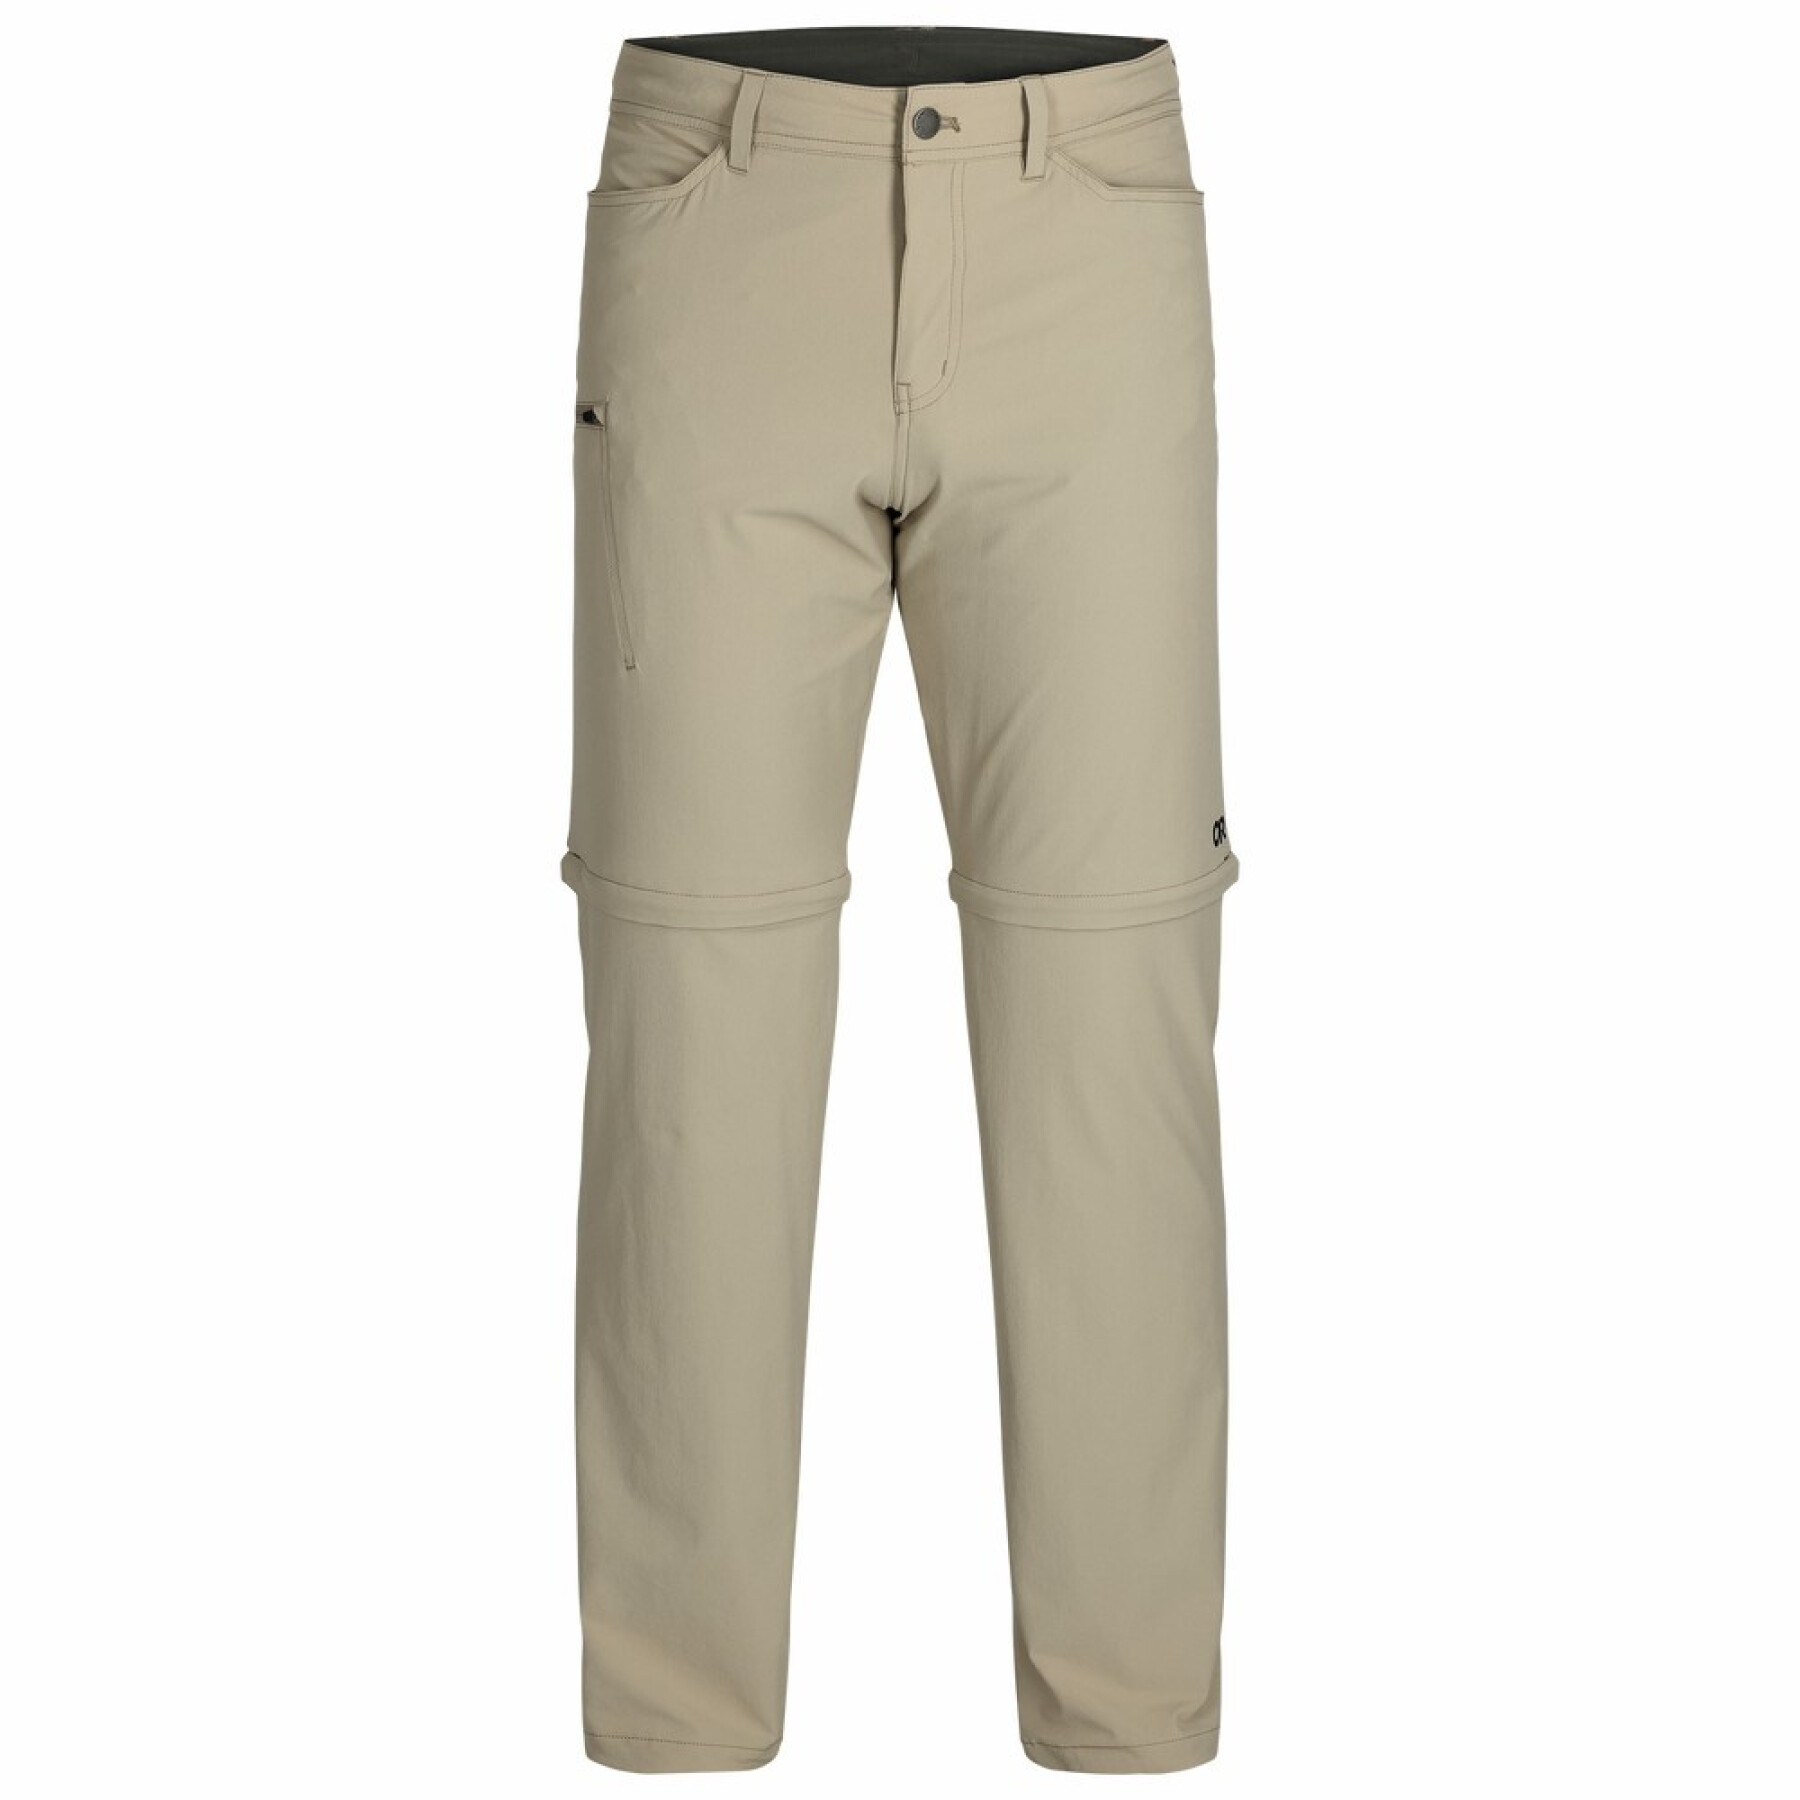 Pantalones convertibles Outdoor Research Ferrosi 34"